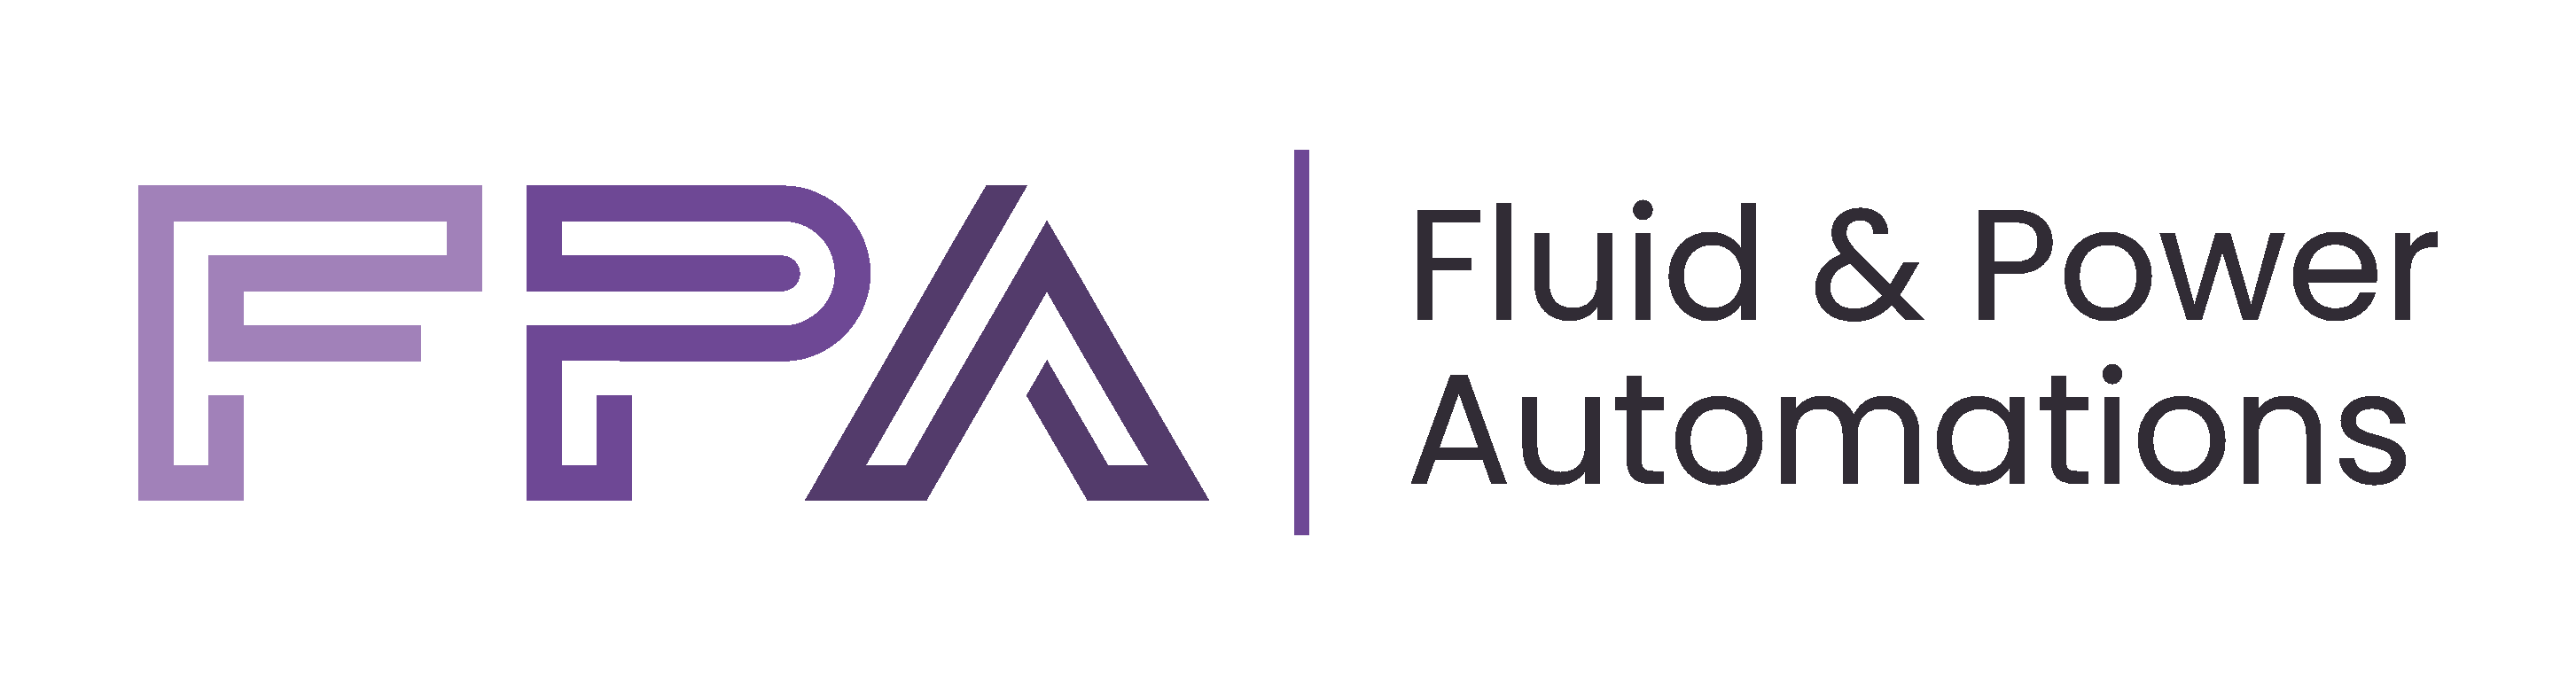 Fluid & Power Automations